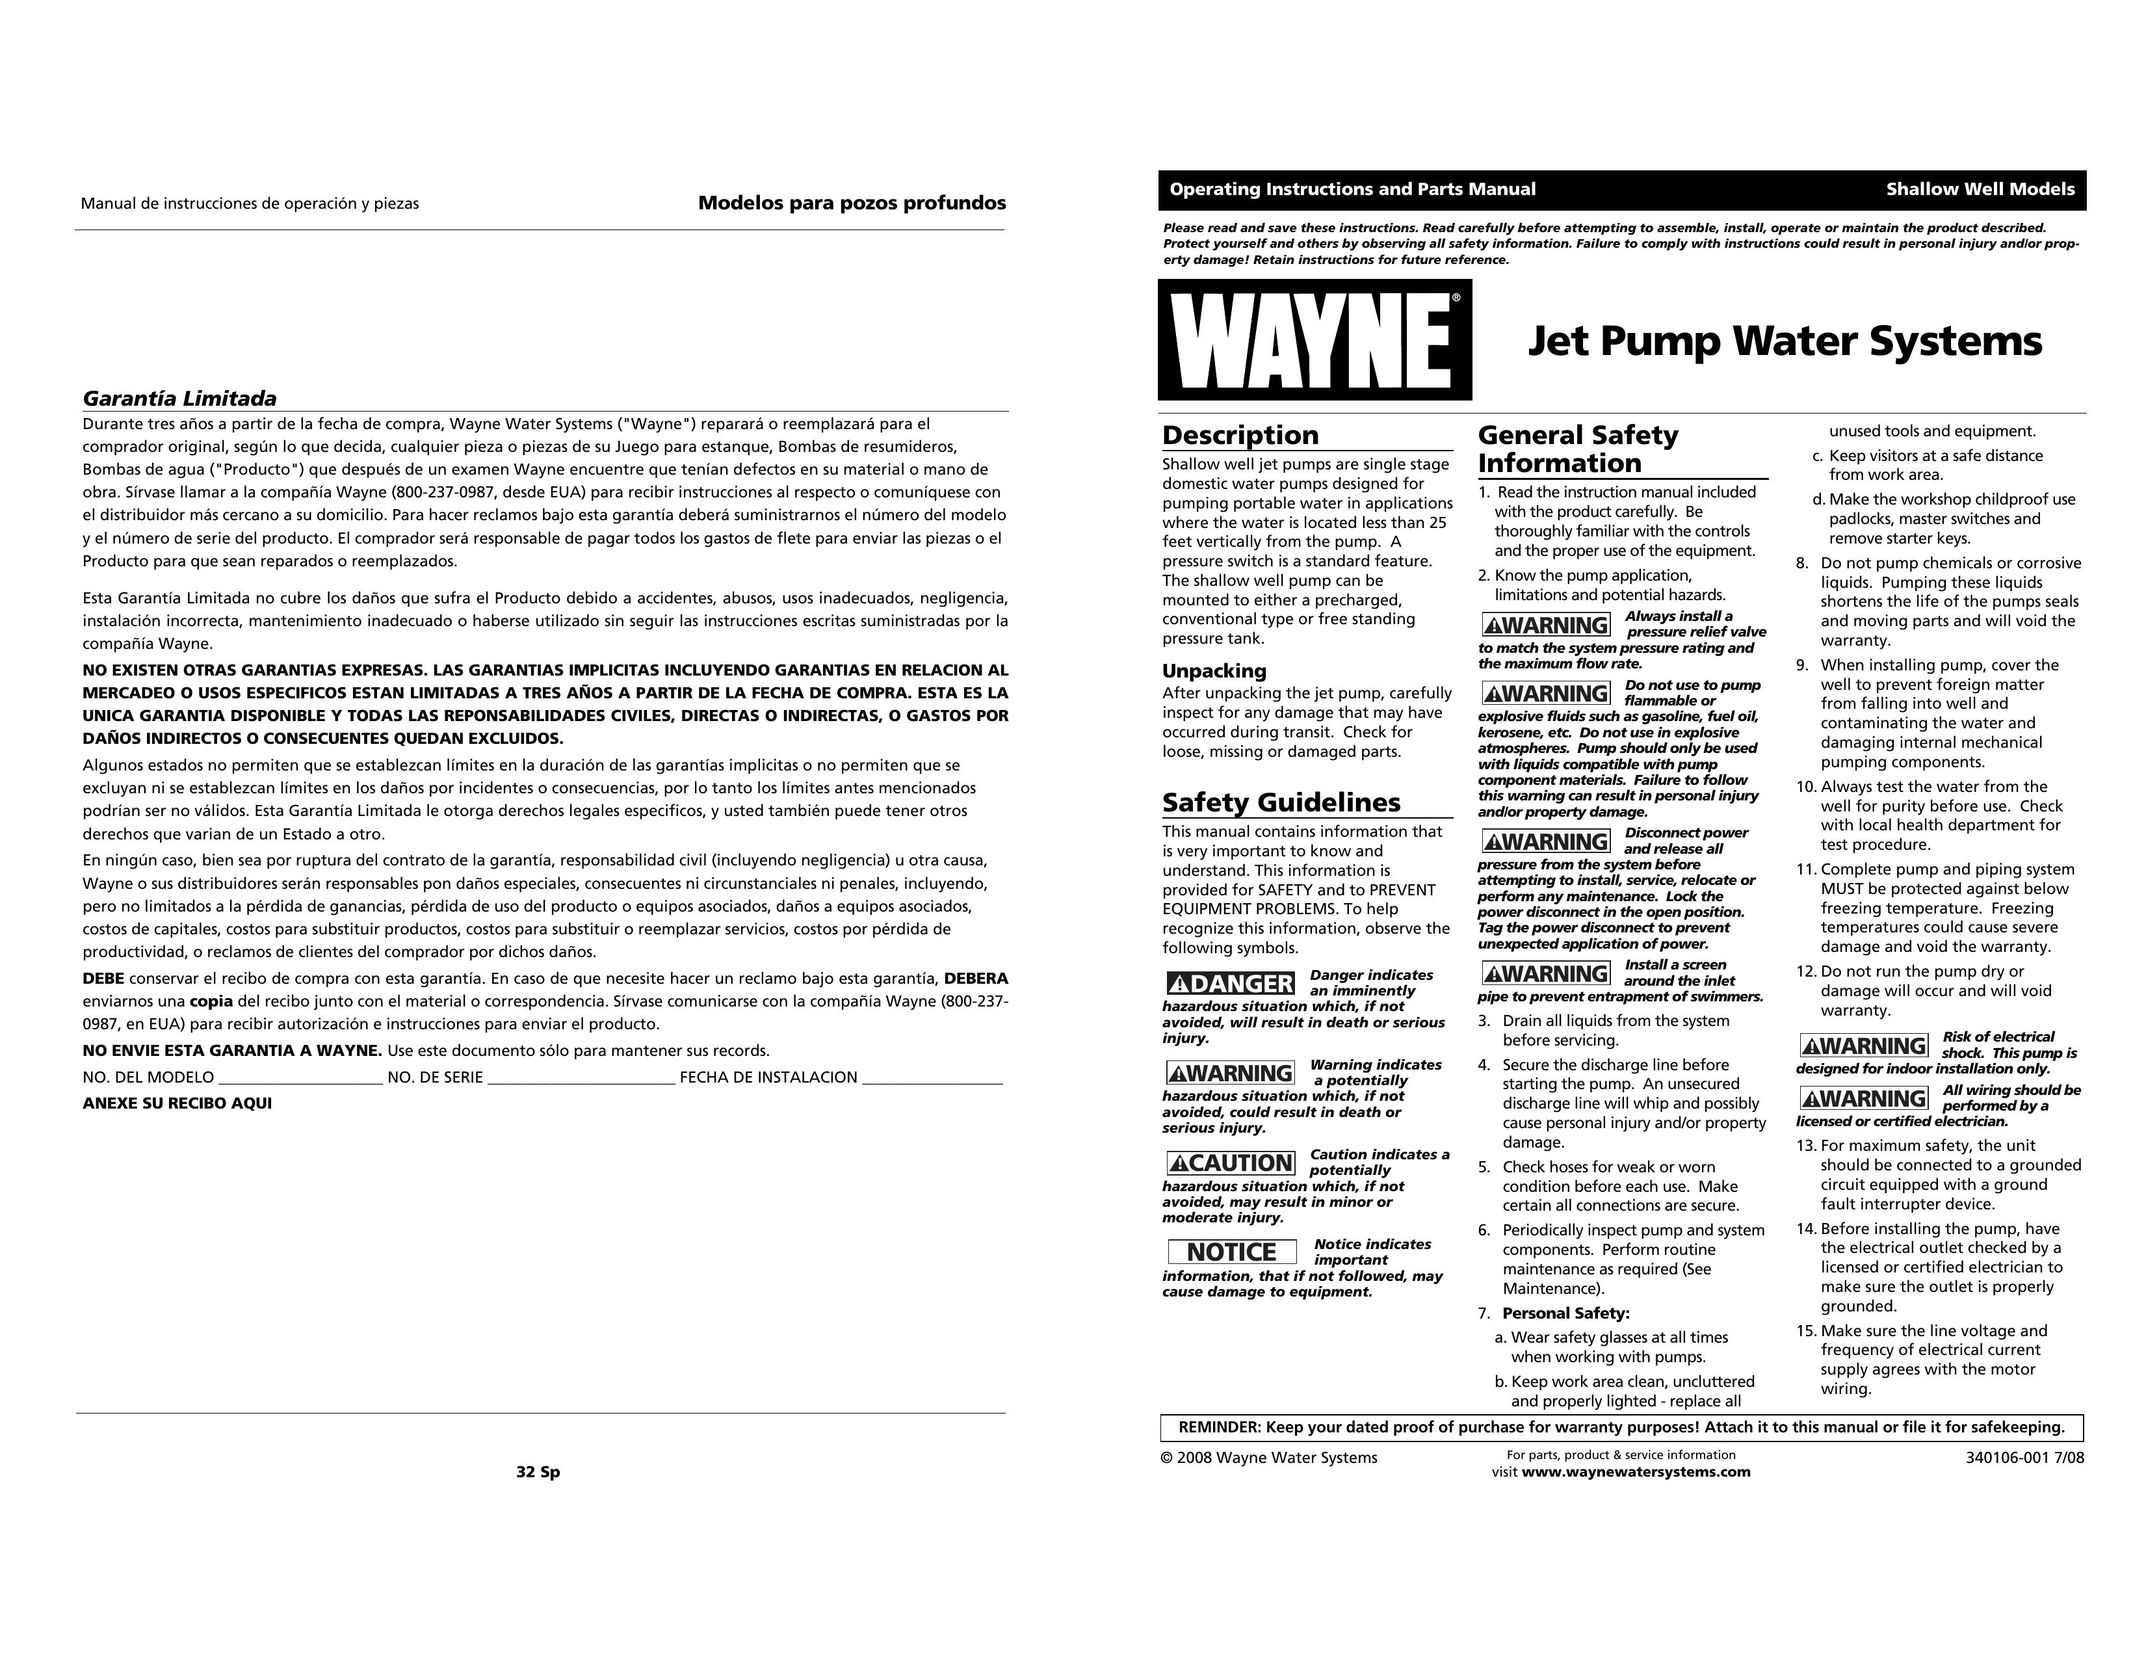 Wayne Shallow Well Plumbing Product User Manual